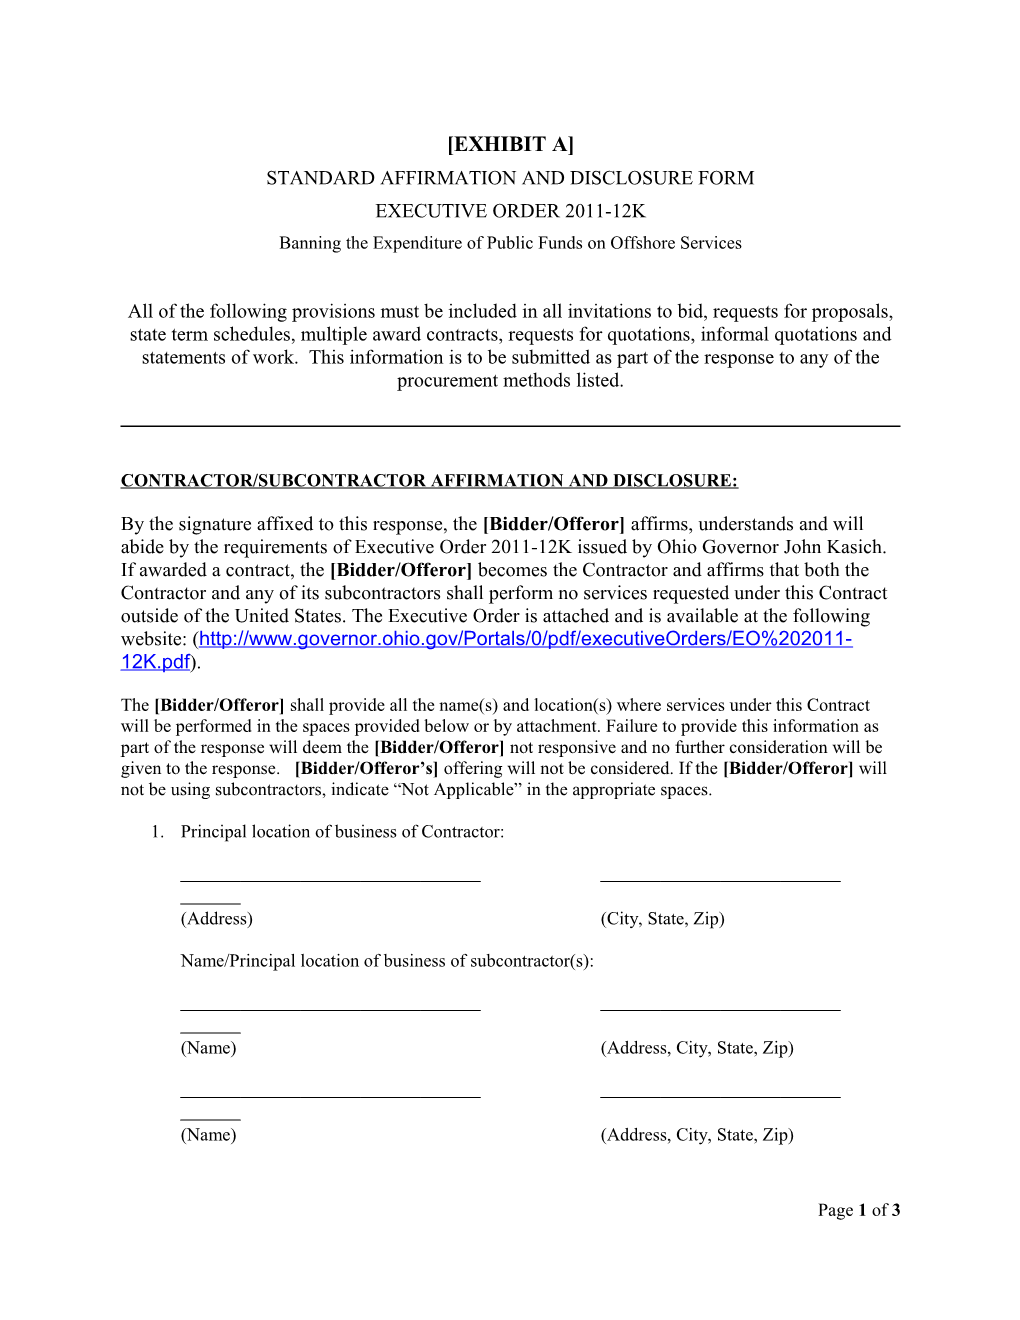 Standard Affirmation and Disclosure Form